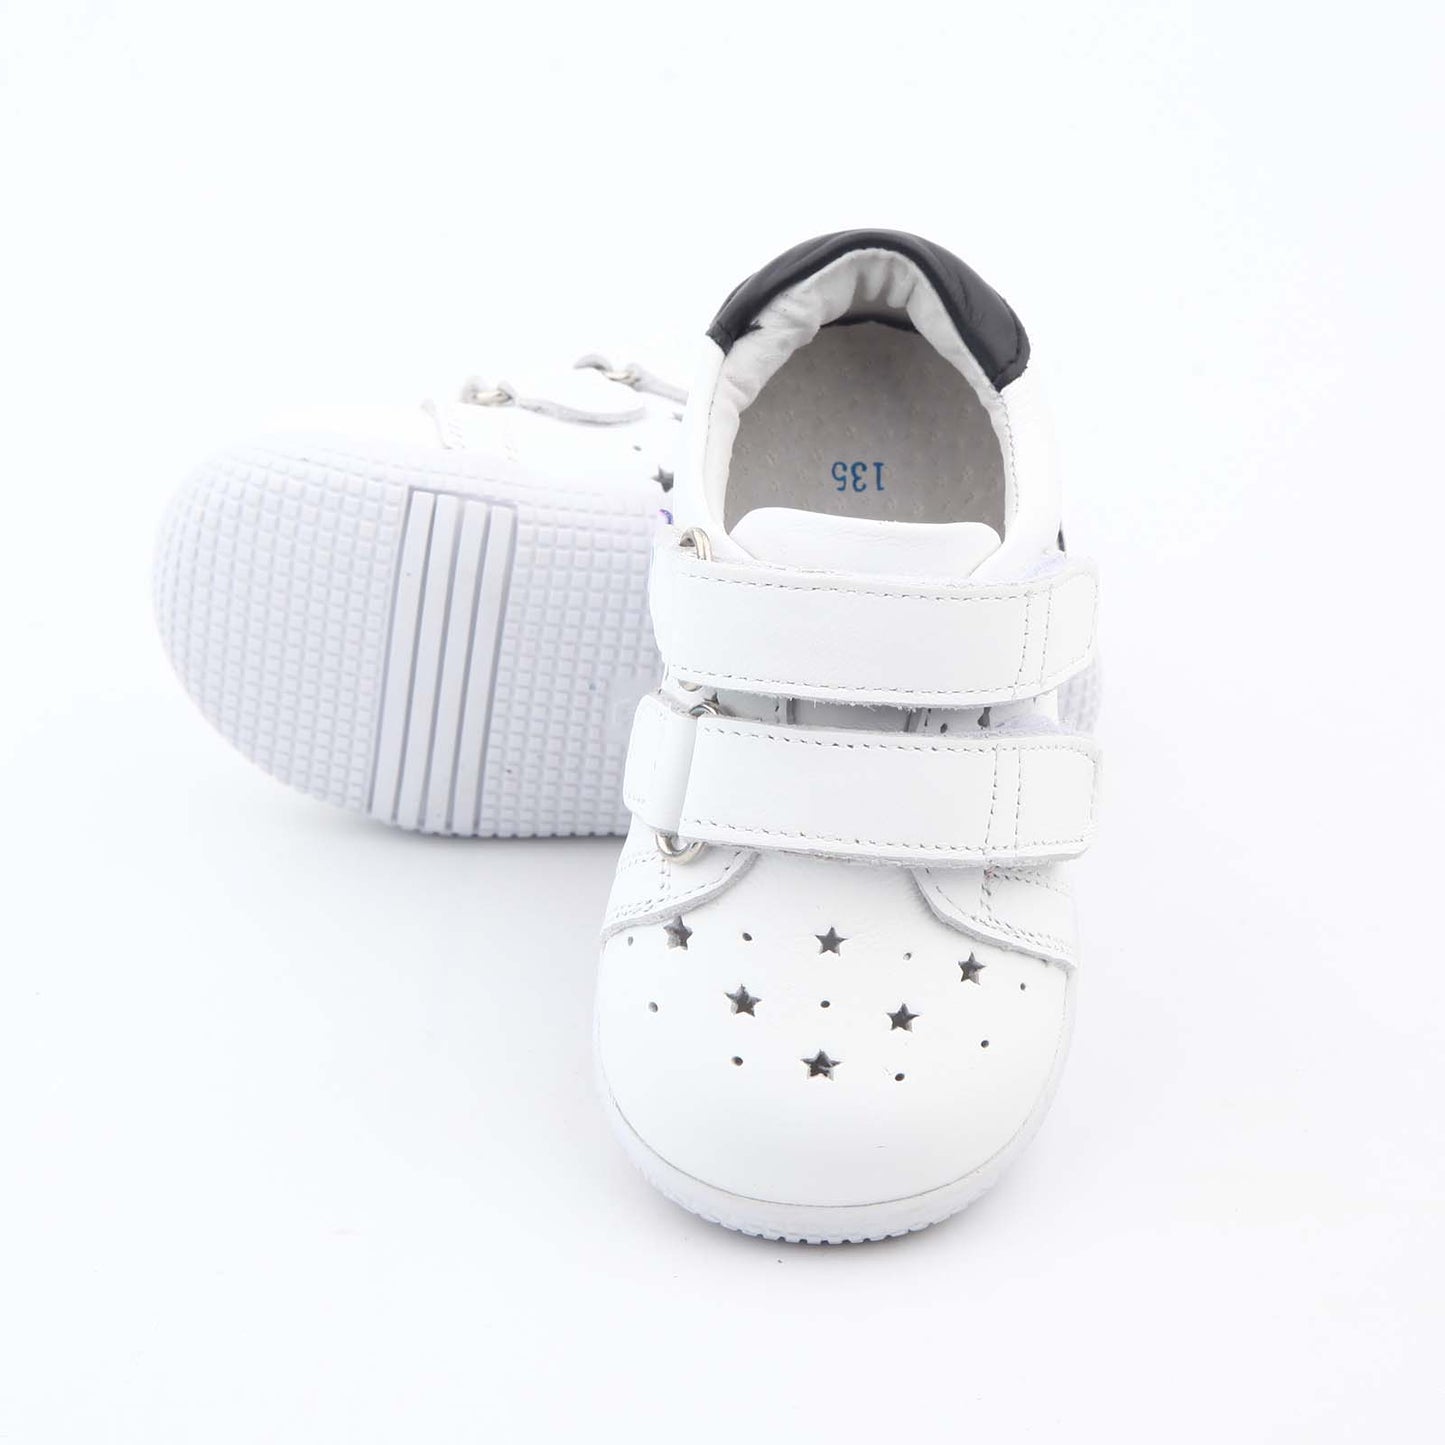 Freycoo - White Felix Flexi-Sole Toddler Shoes